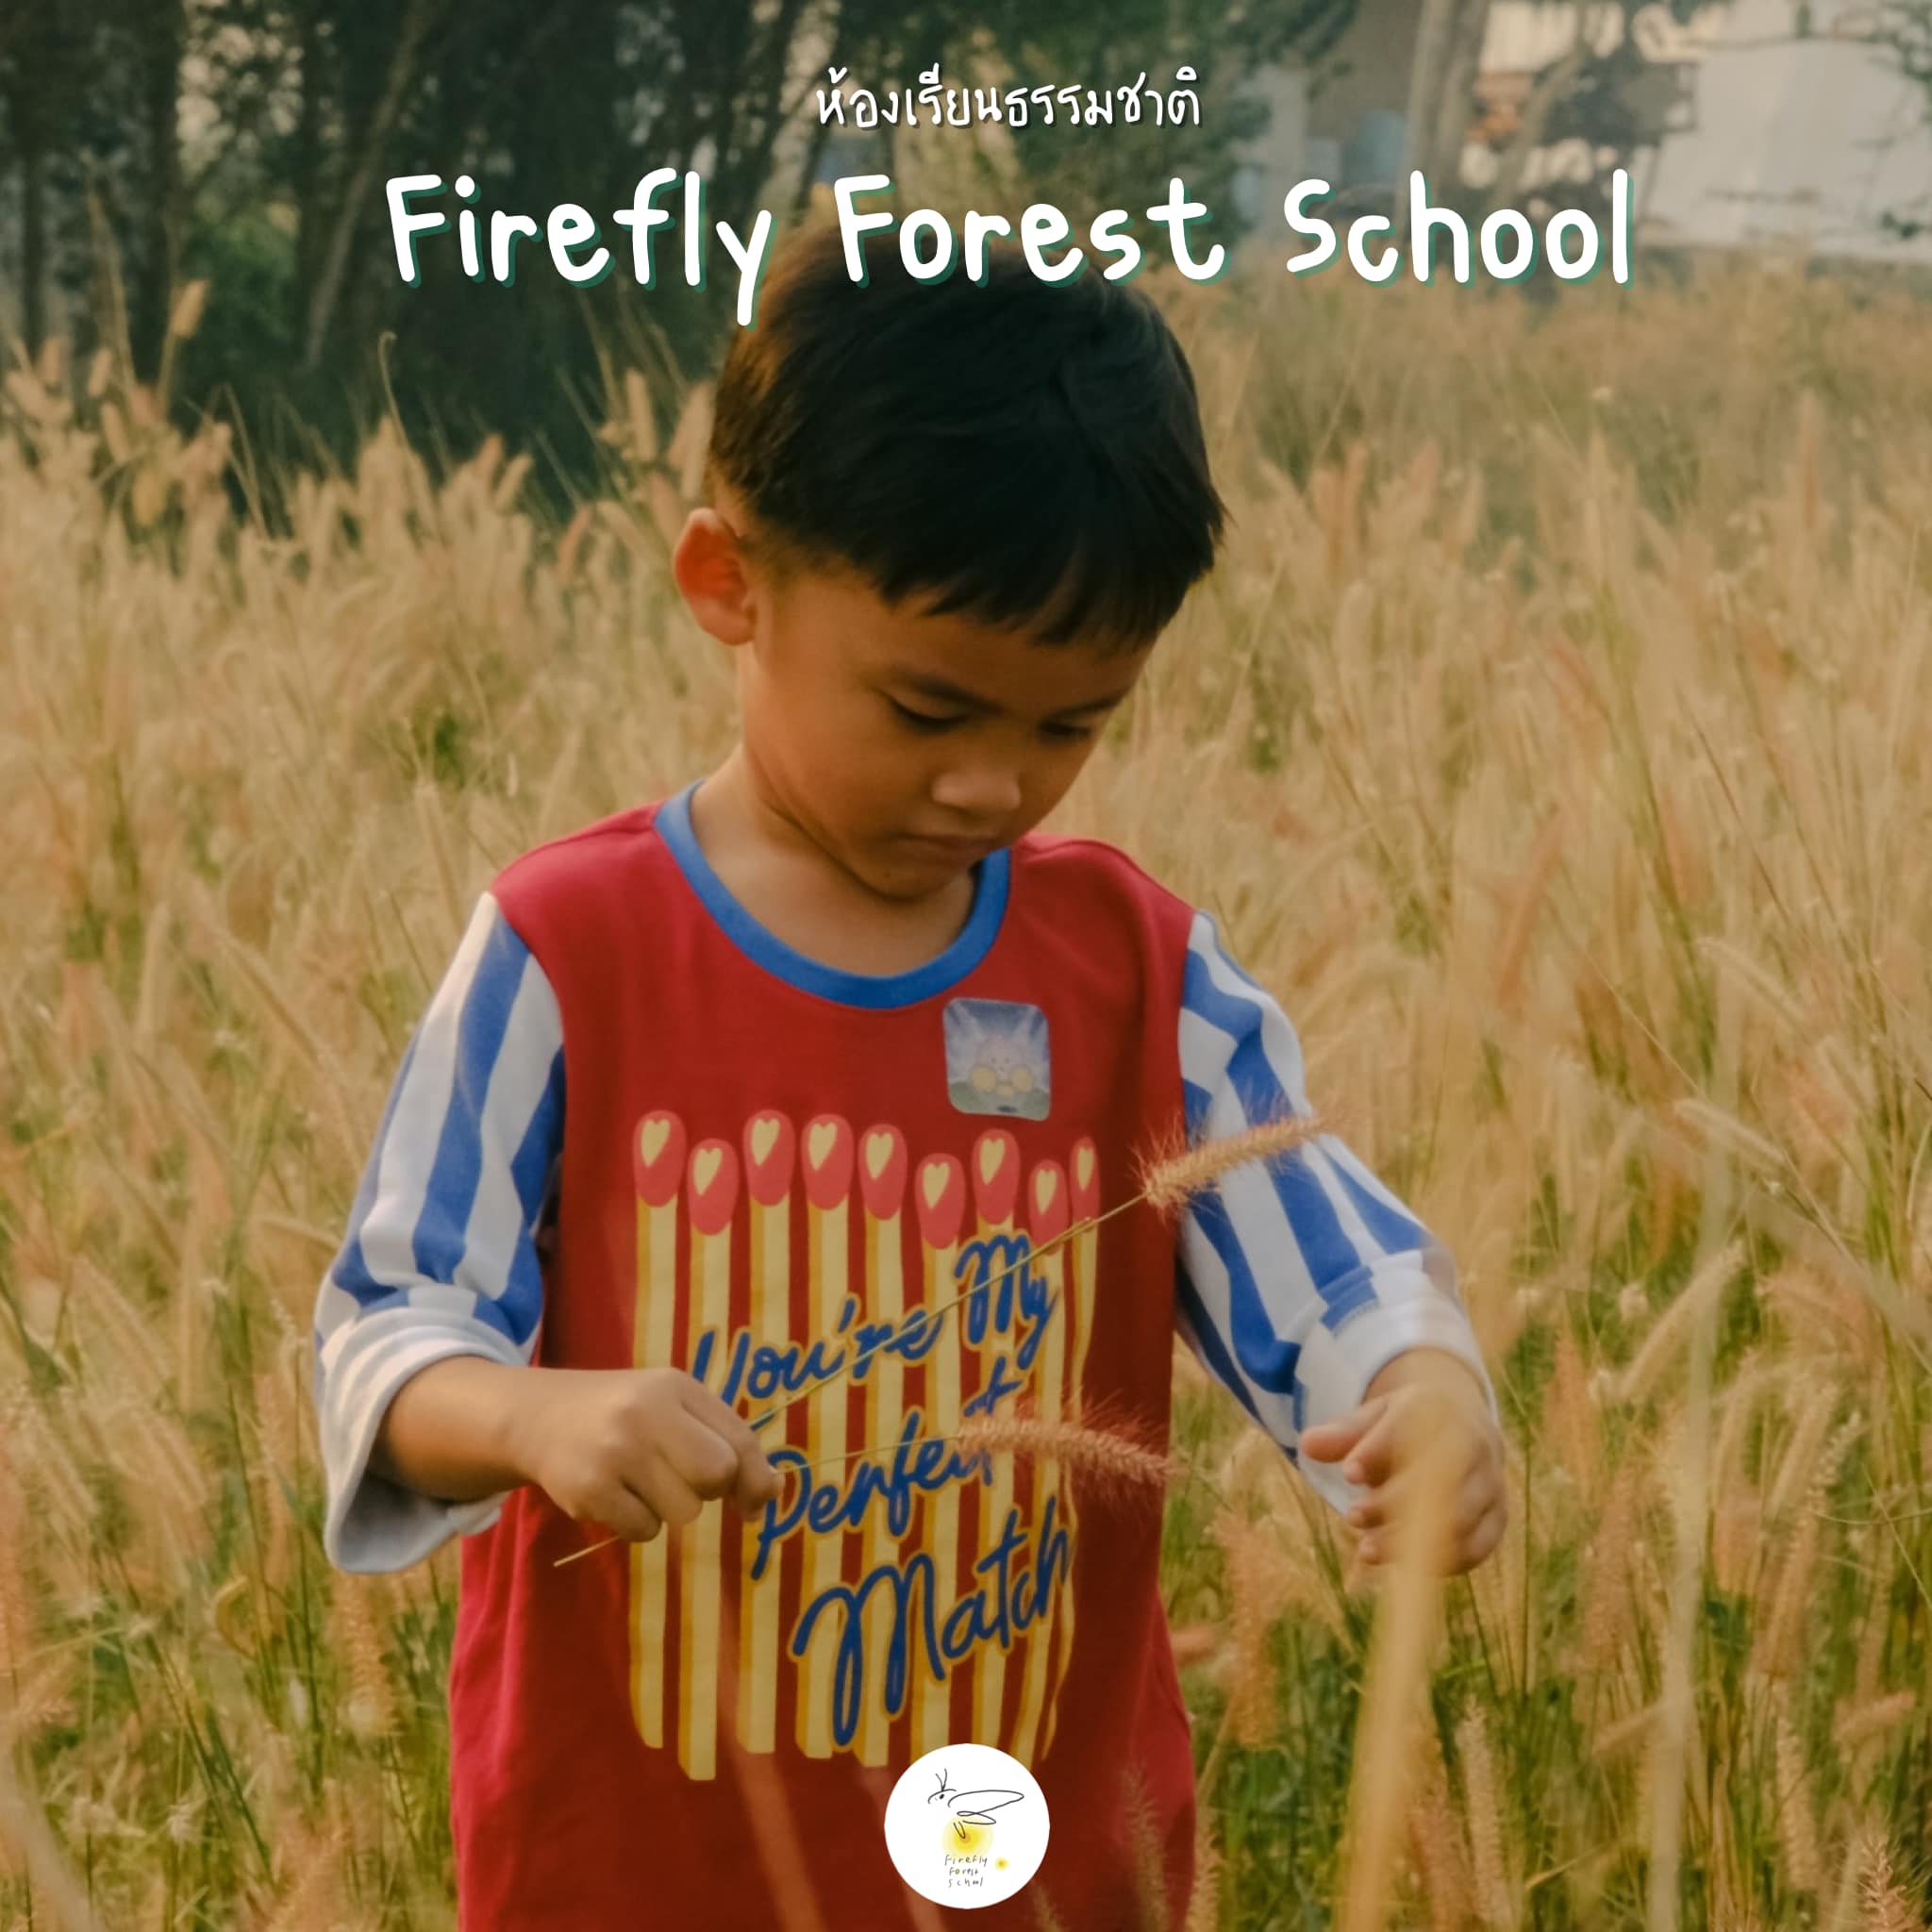 Over in the meadow.
#fireflyforestschool
#ห้องเรียนธรรมชาติ
#intothewoods 14

...